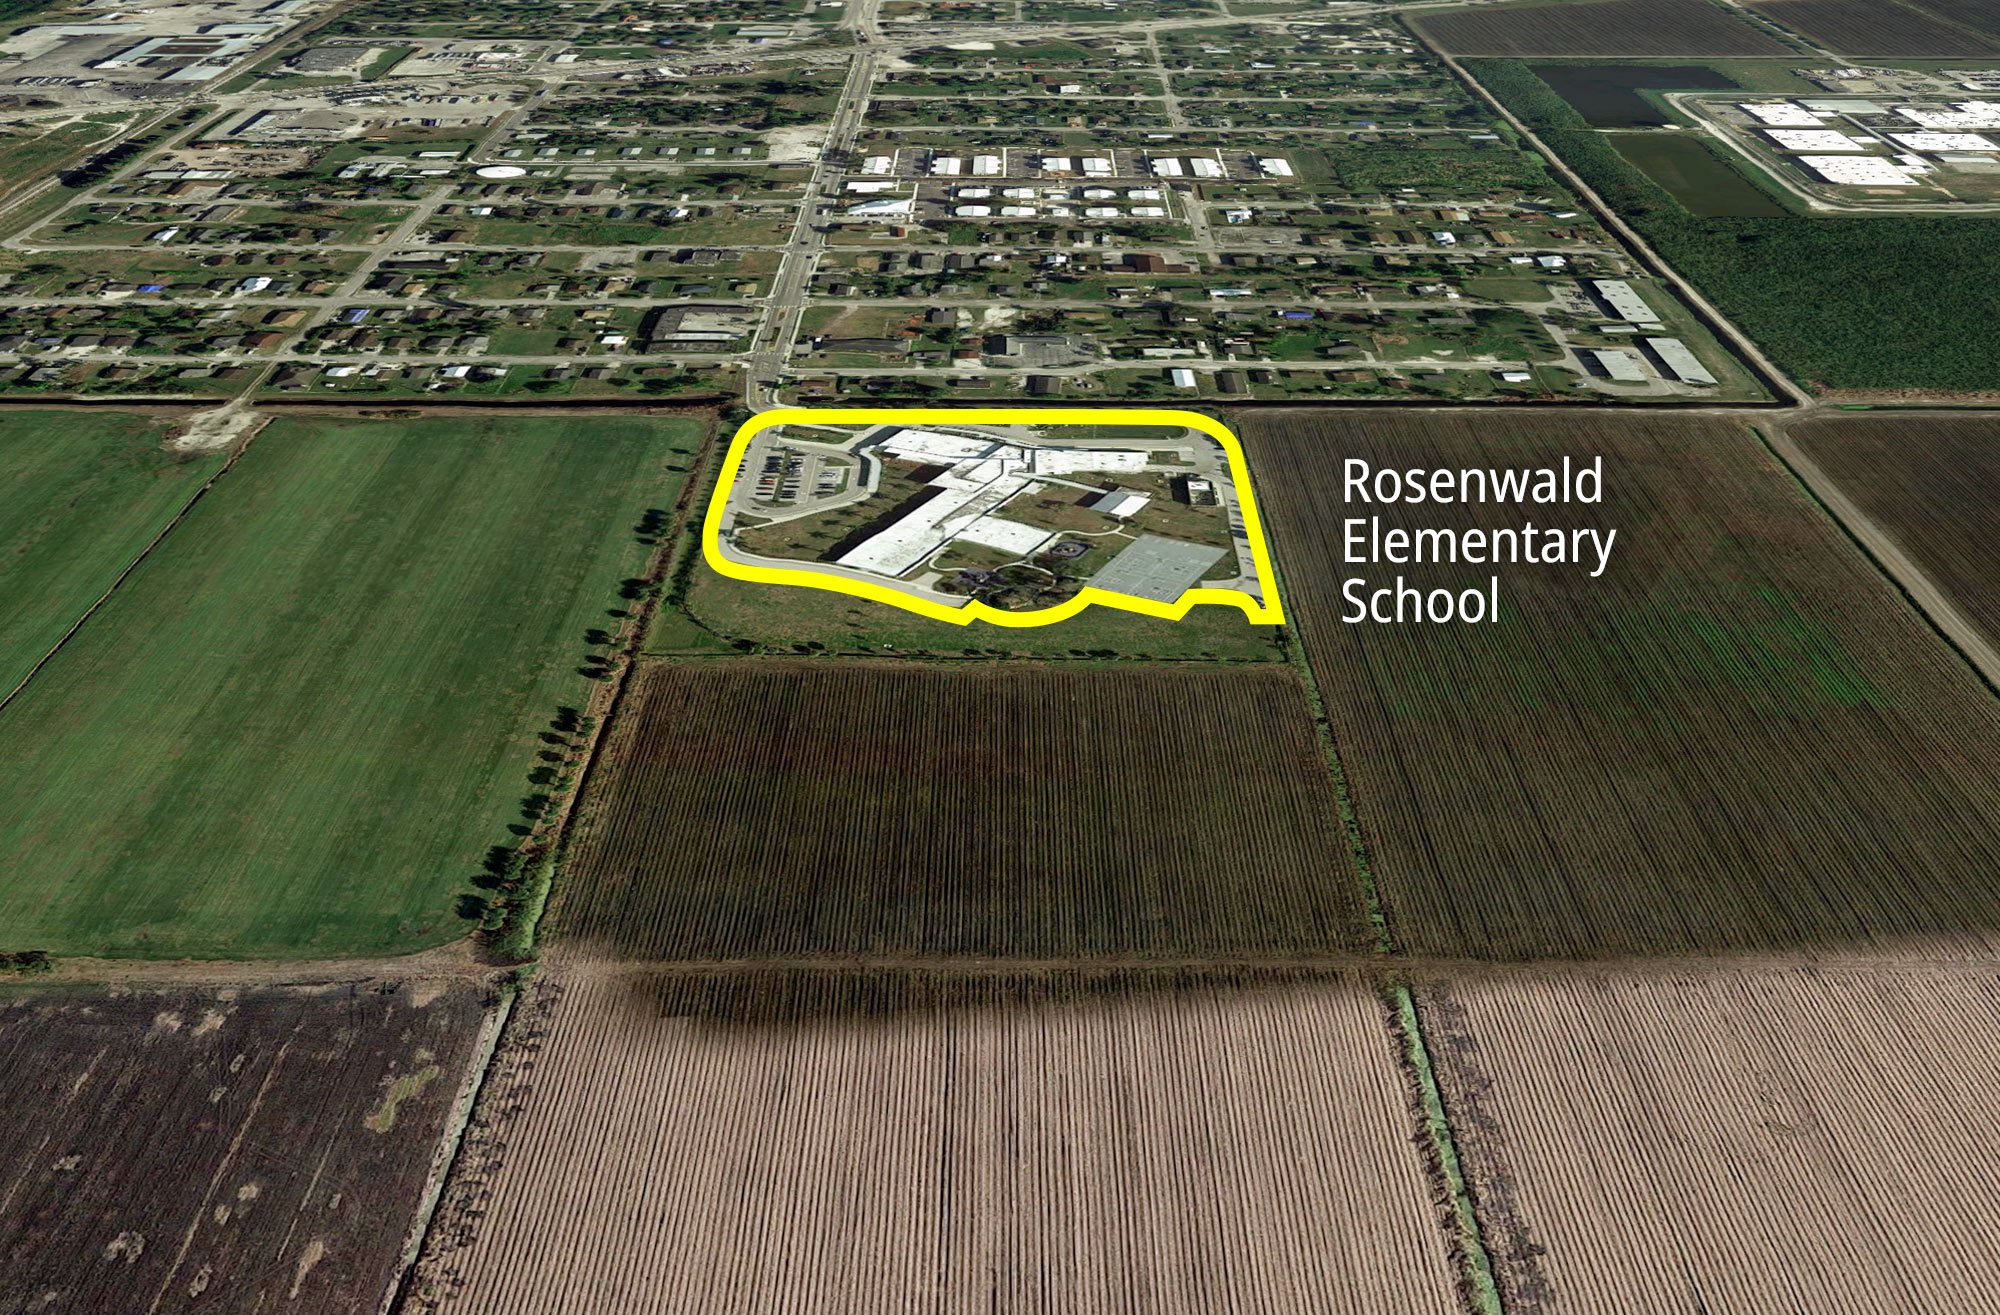 Rosenwald Elementary School